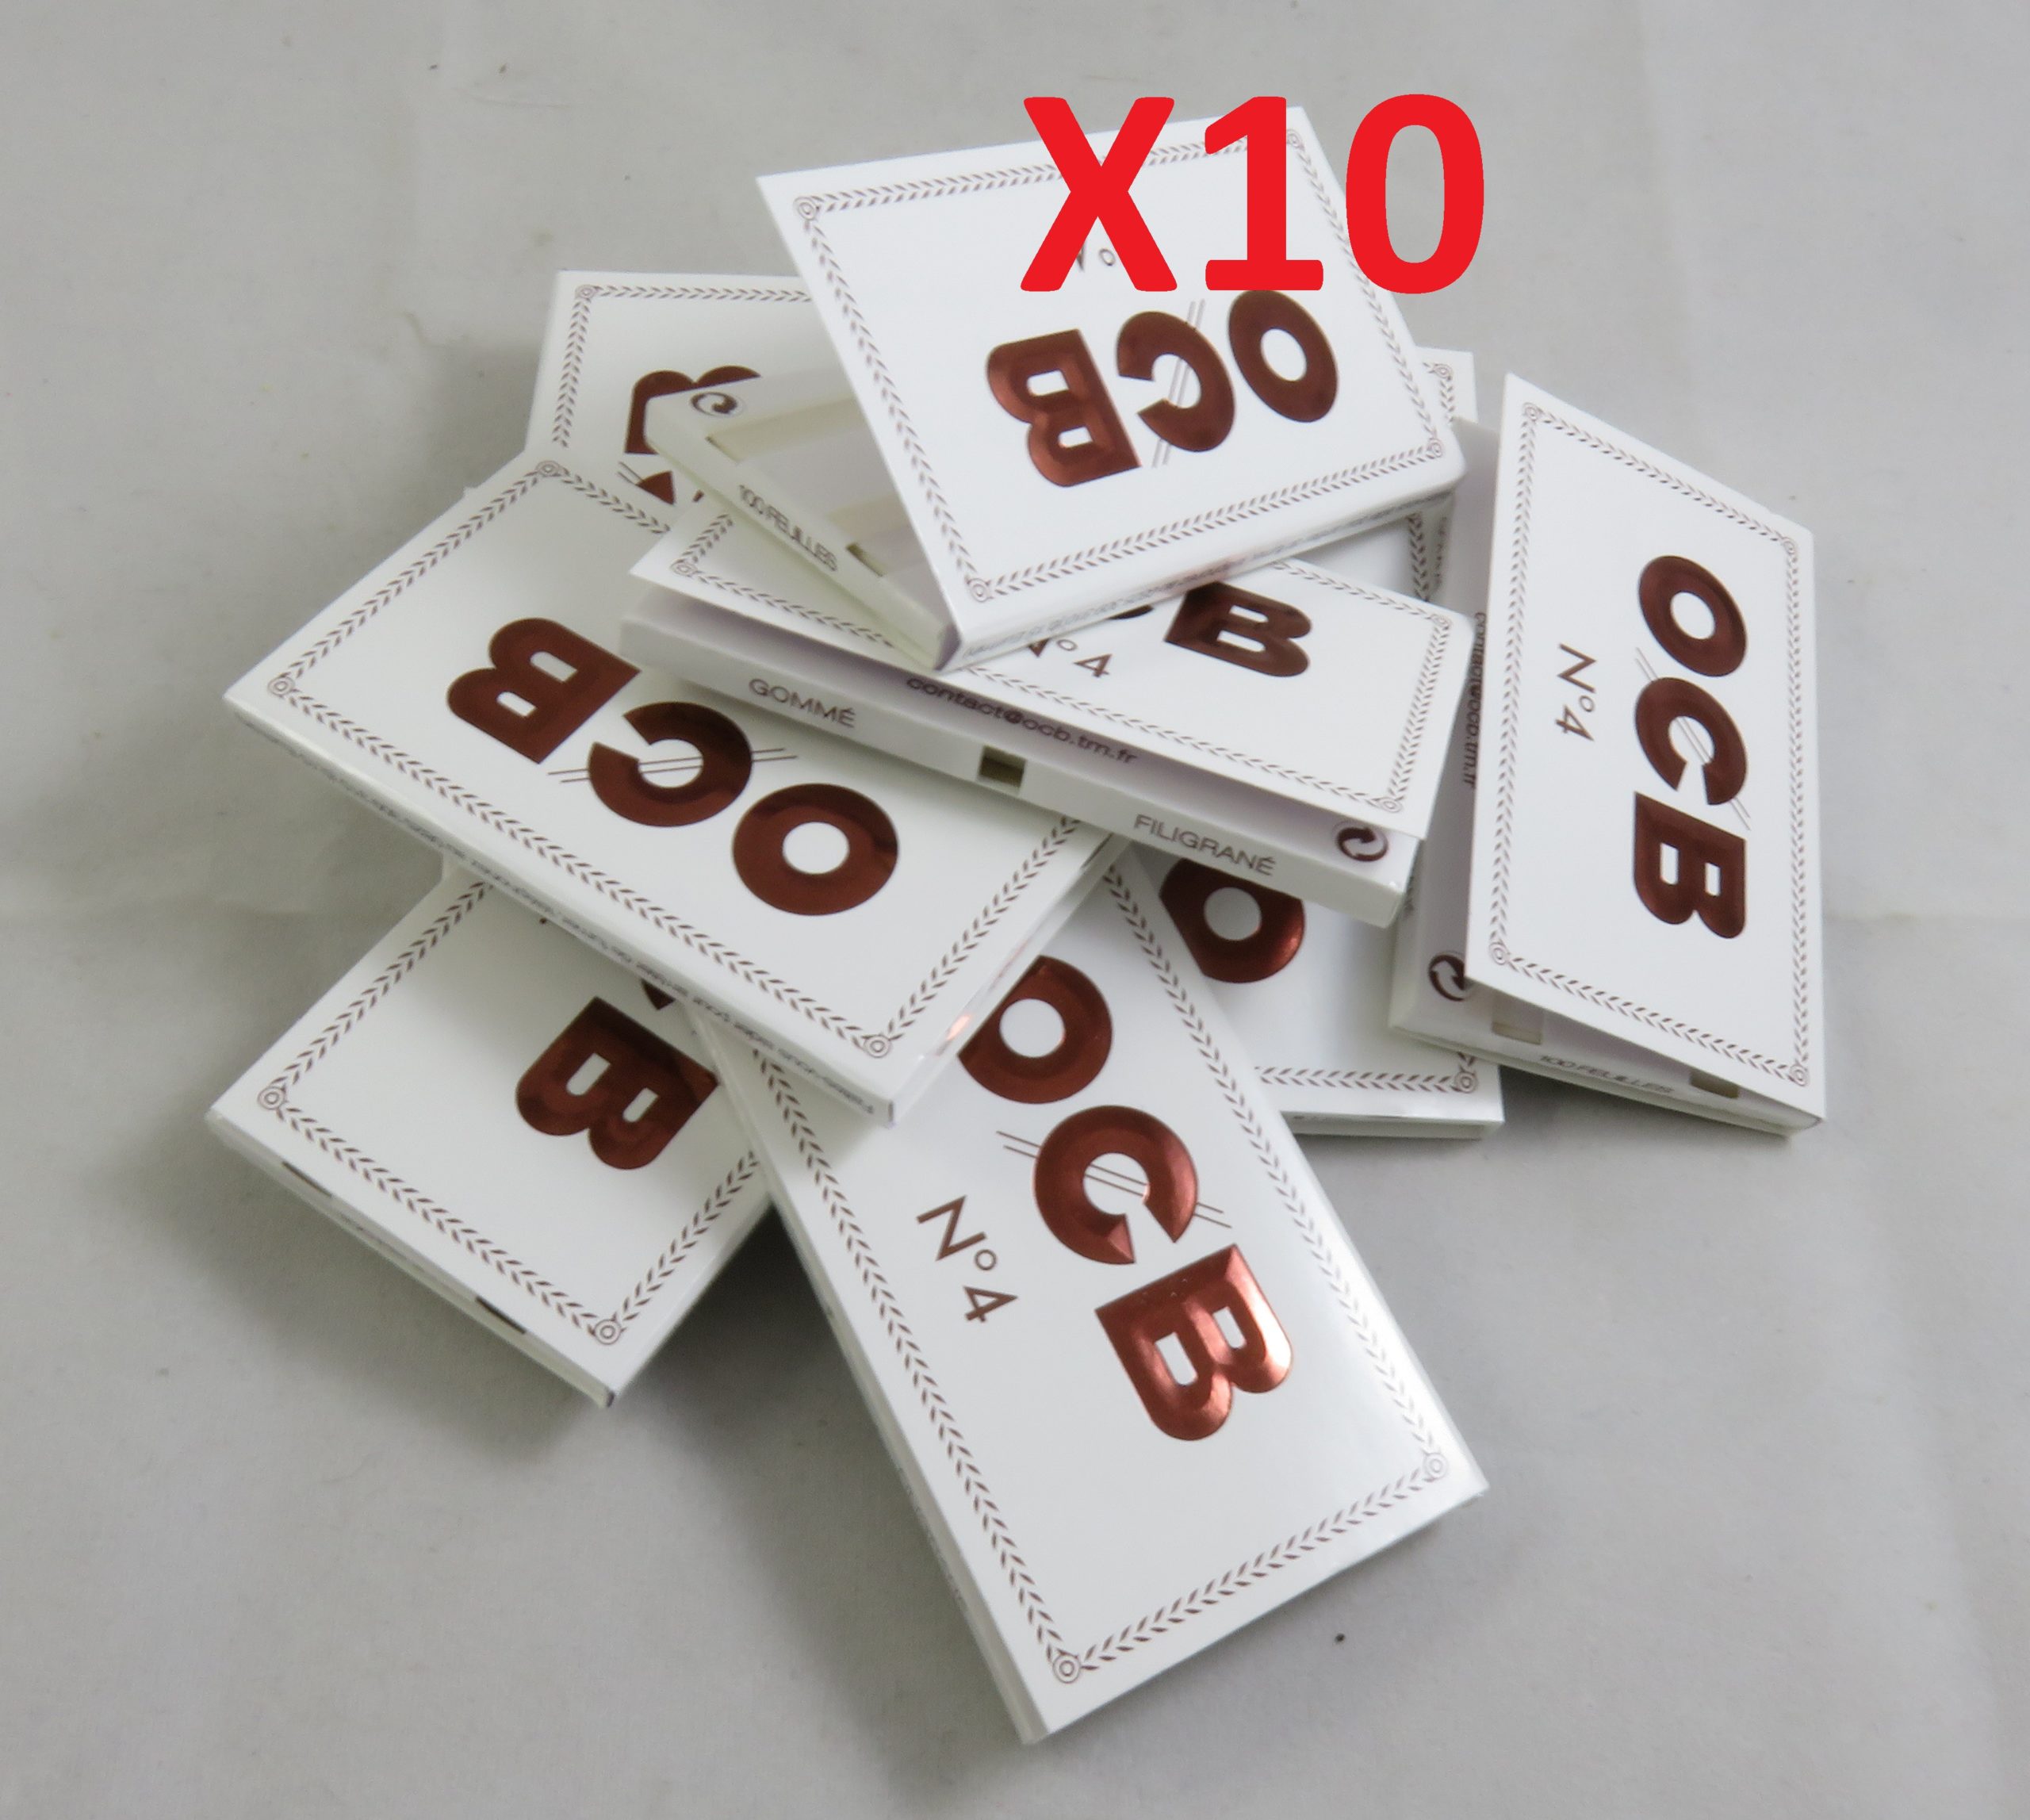 feuille à rouler OCB BIO ,10 carnets de 100 feuilles OCB chanvre BIO